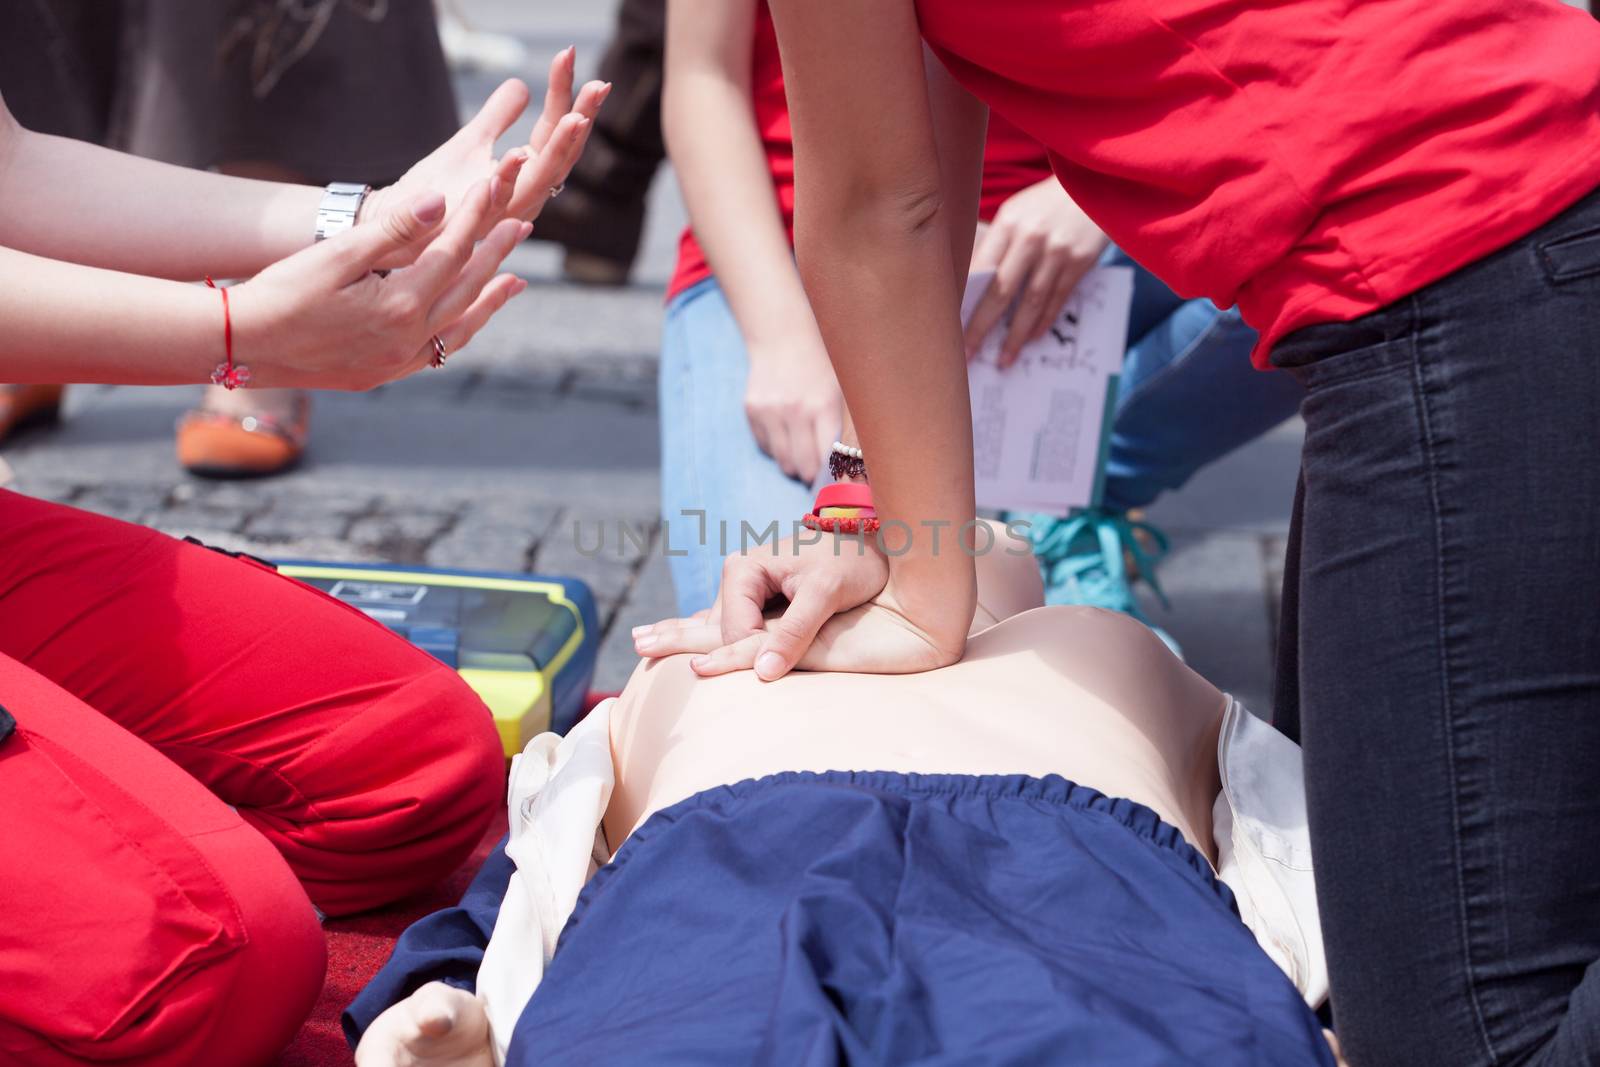 Cardiopulmonary resuscitation - CPR. Cardiac massage training.